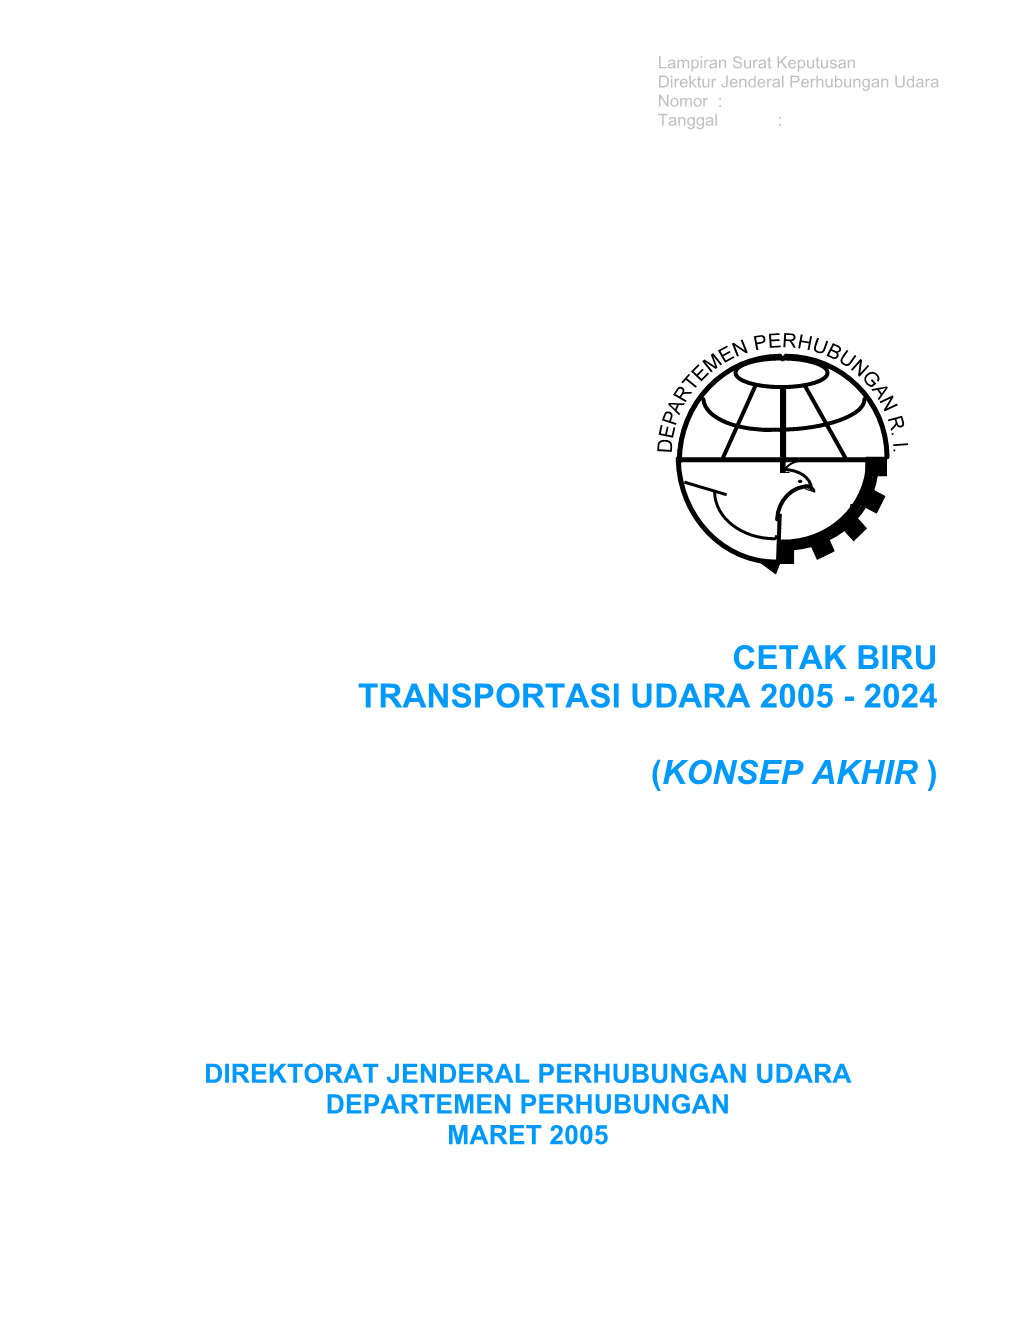 Cetak Biru Transportasi Udara 2005 - 2024